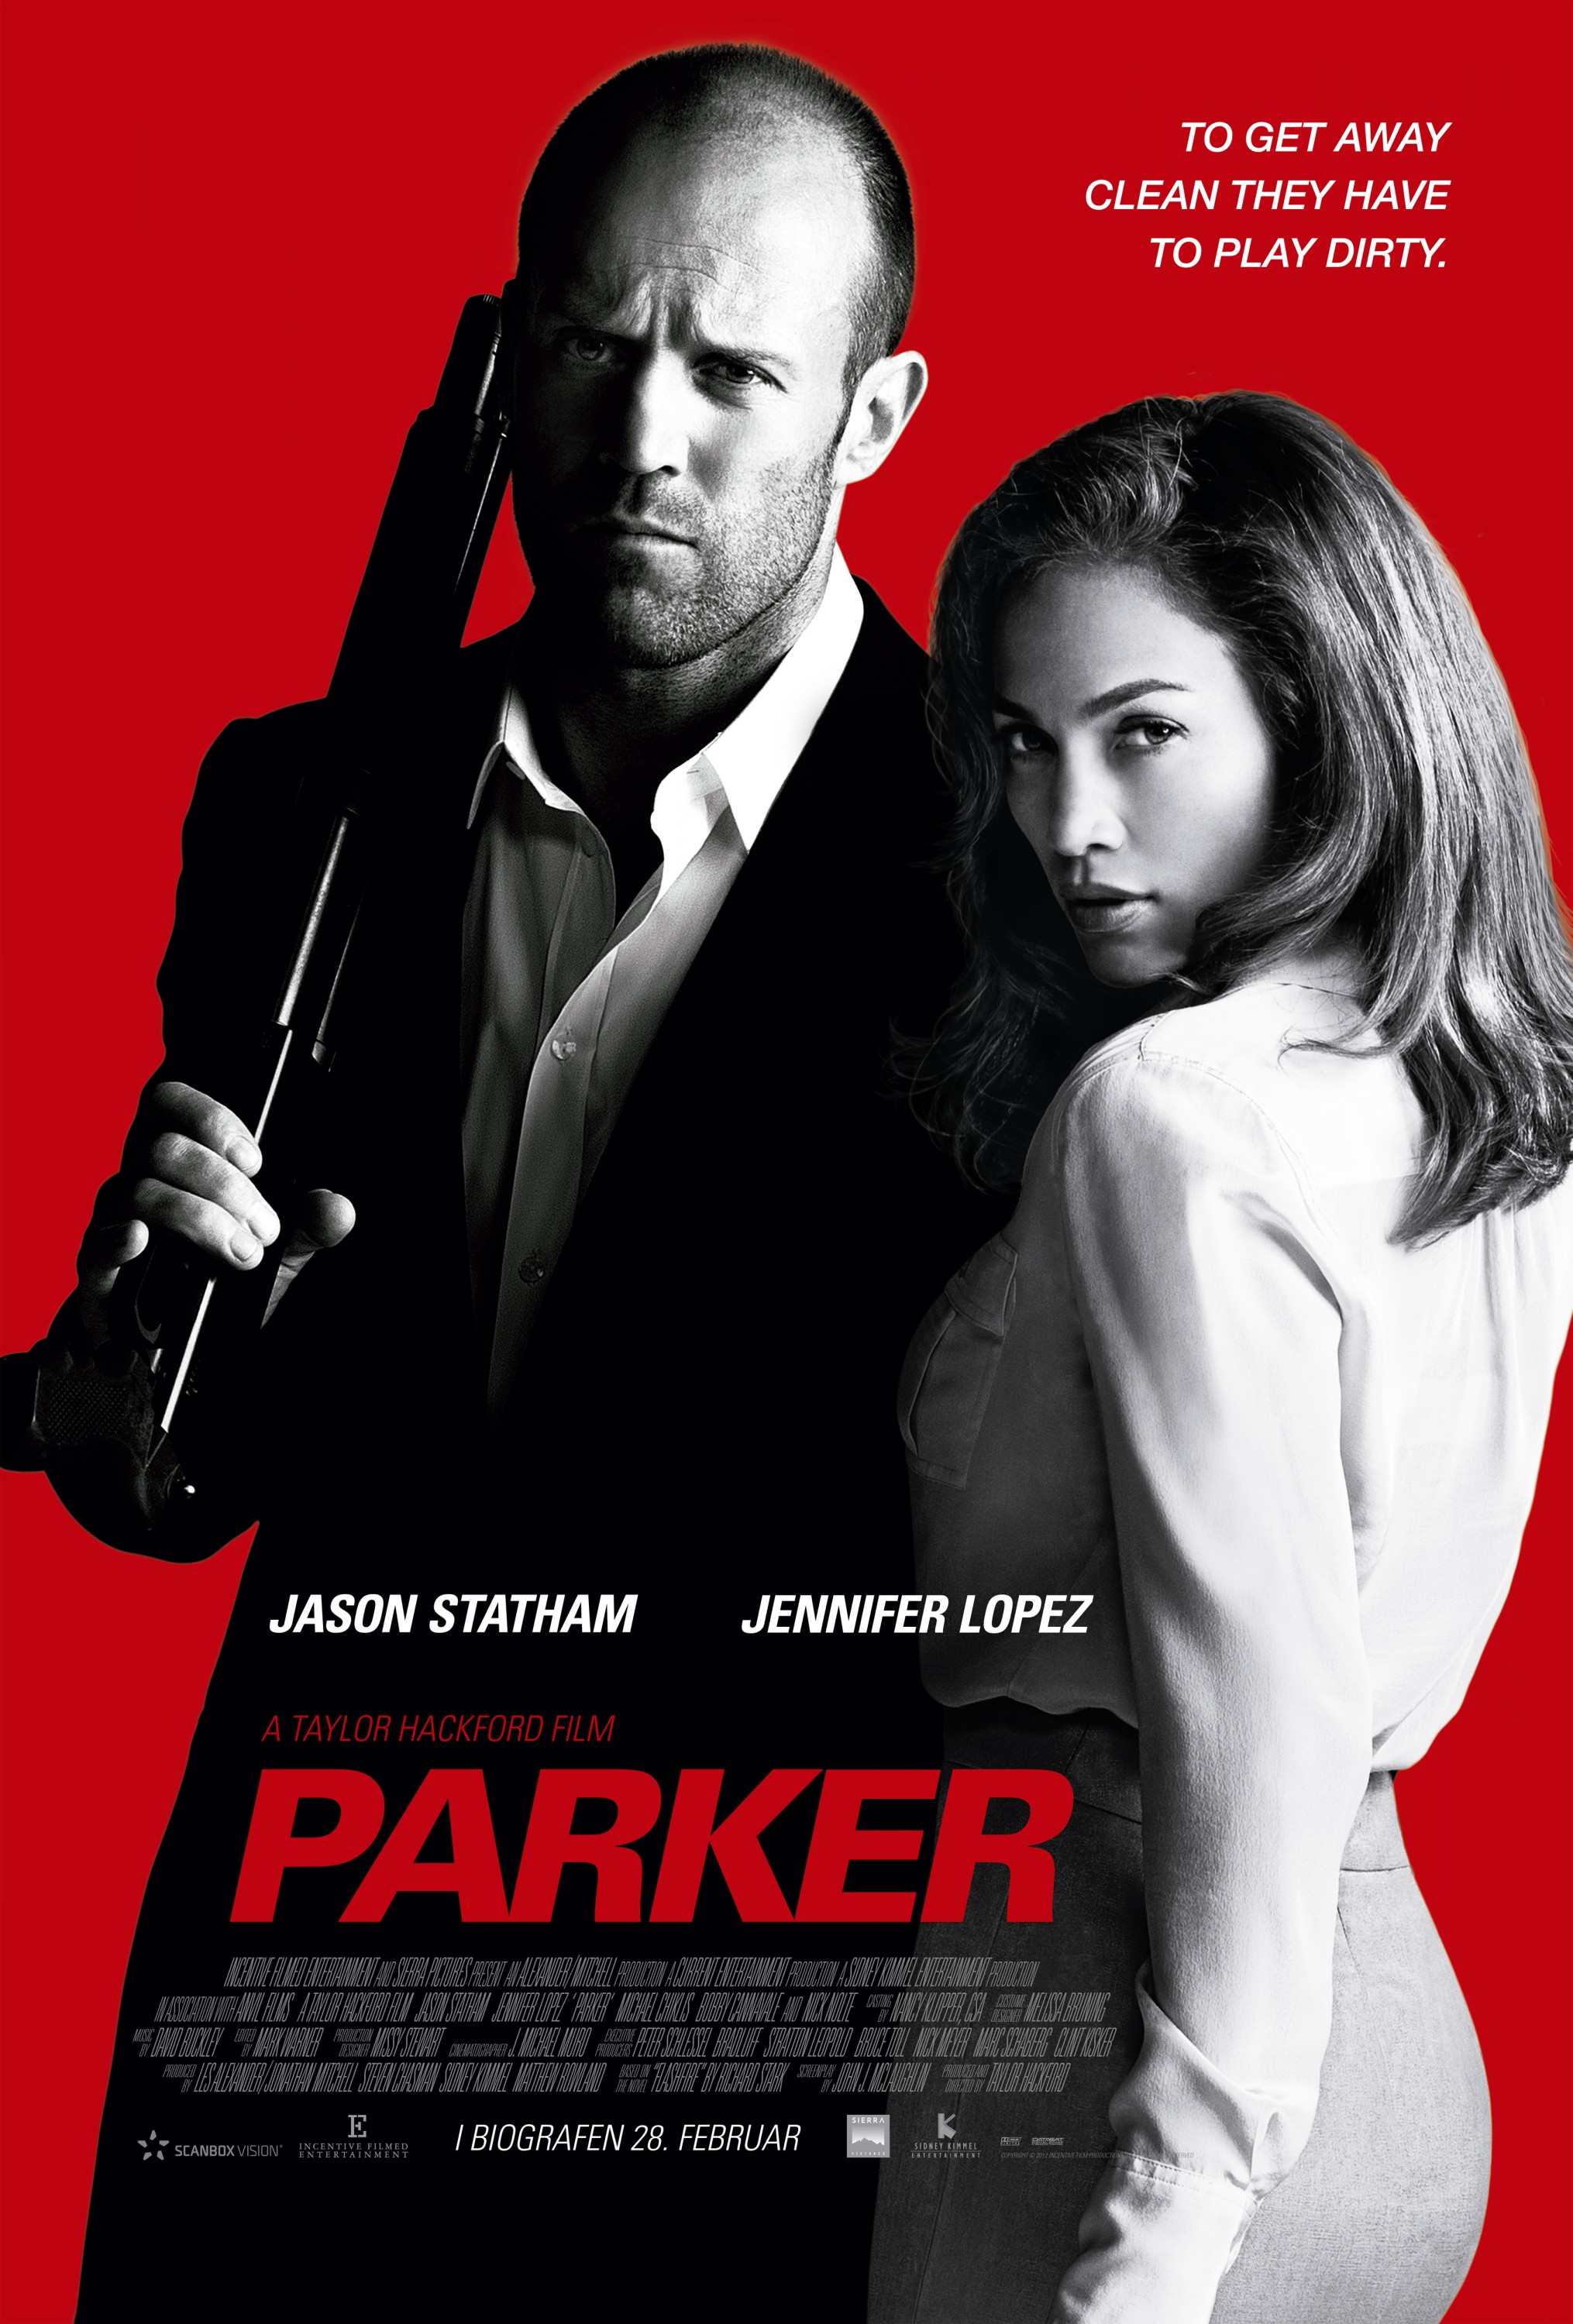 release-day-round-up-parker-starring-jason-statham-and-jennifer-lopez